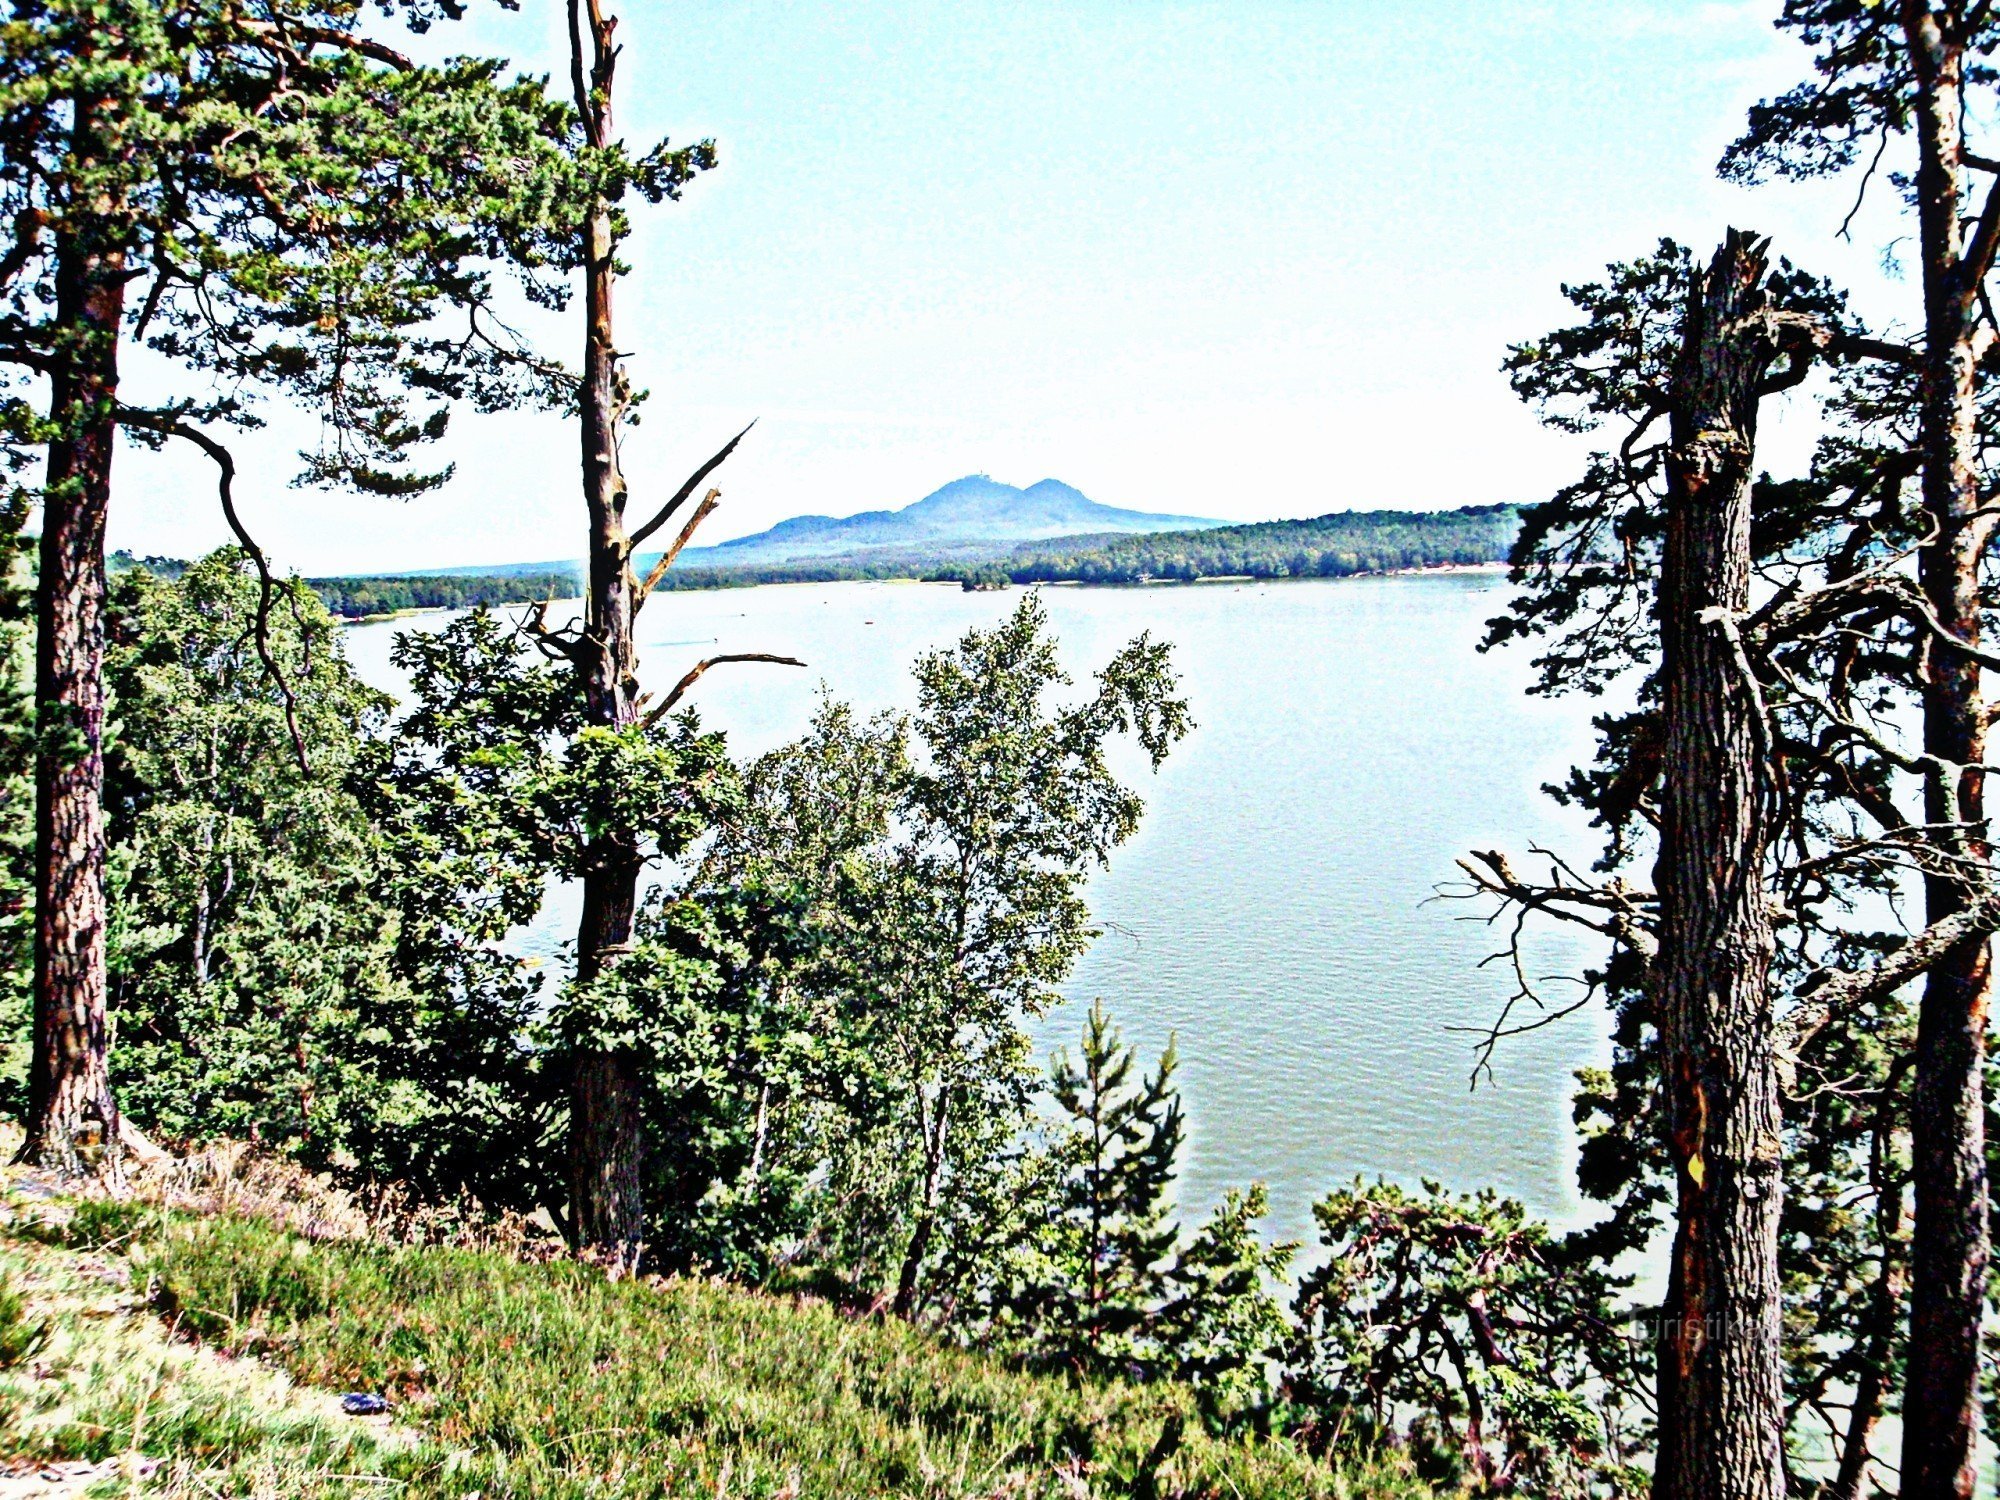 View across the lake to Bezděz